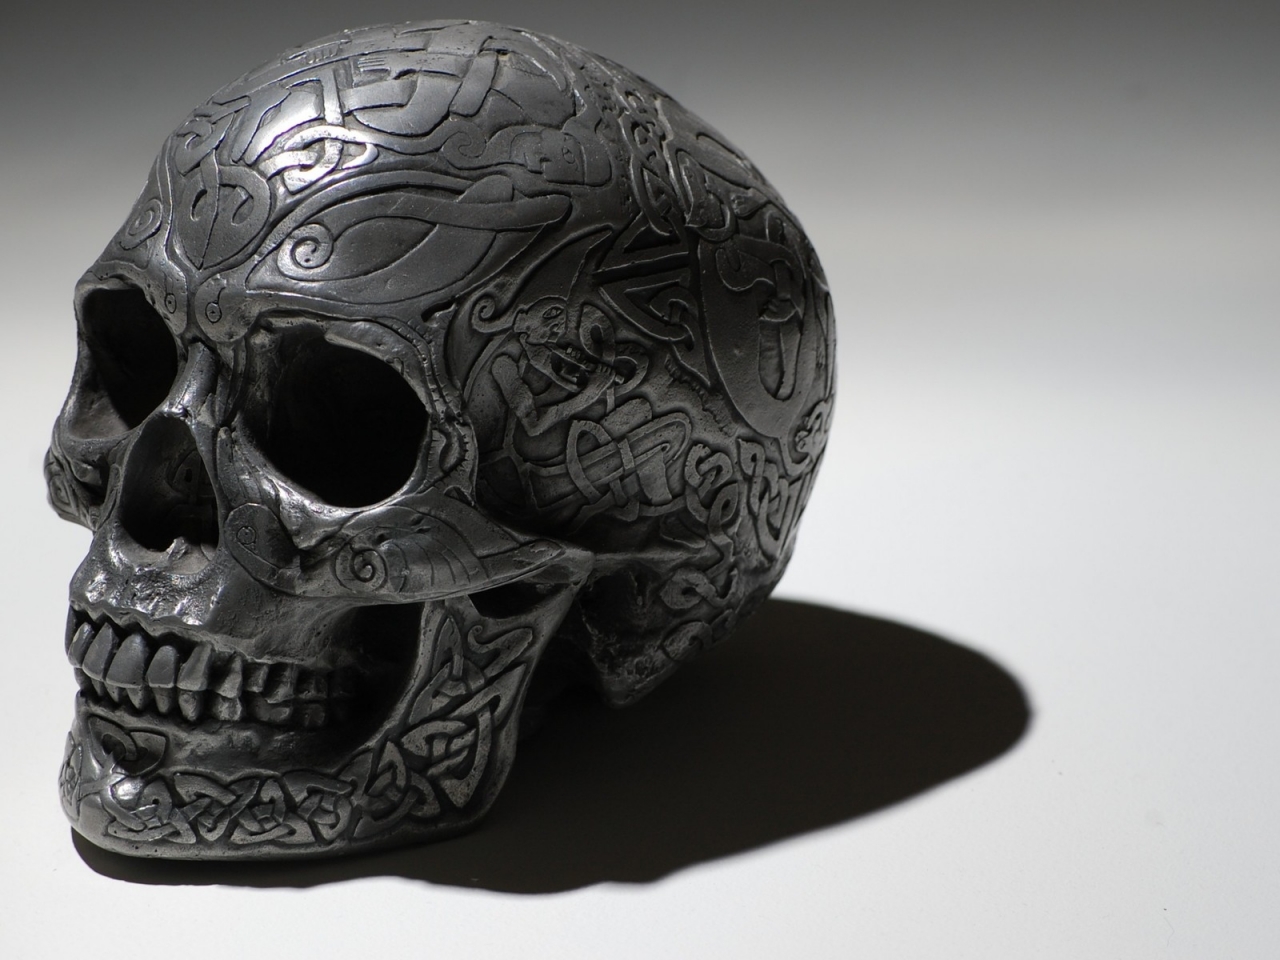 Metal Skull for 1280 x 960 resolution